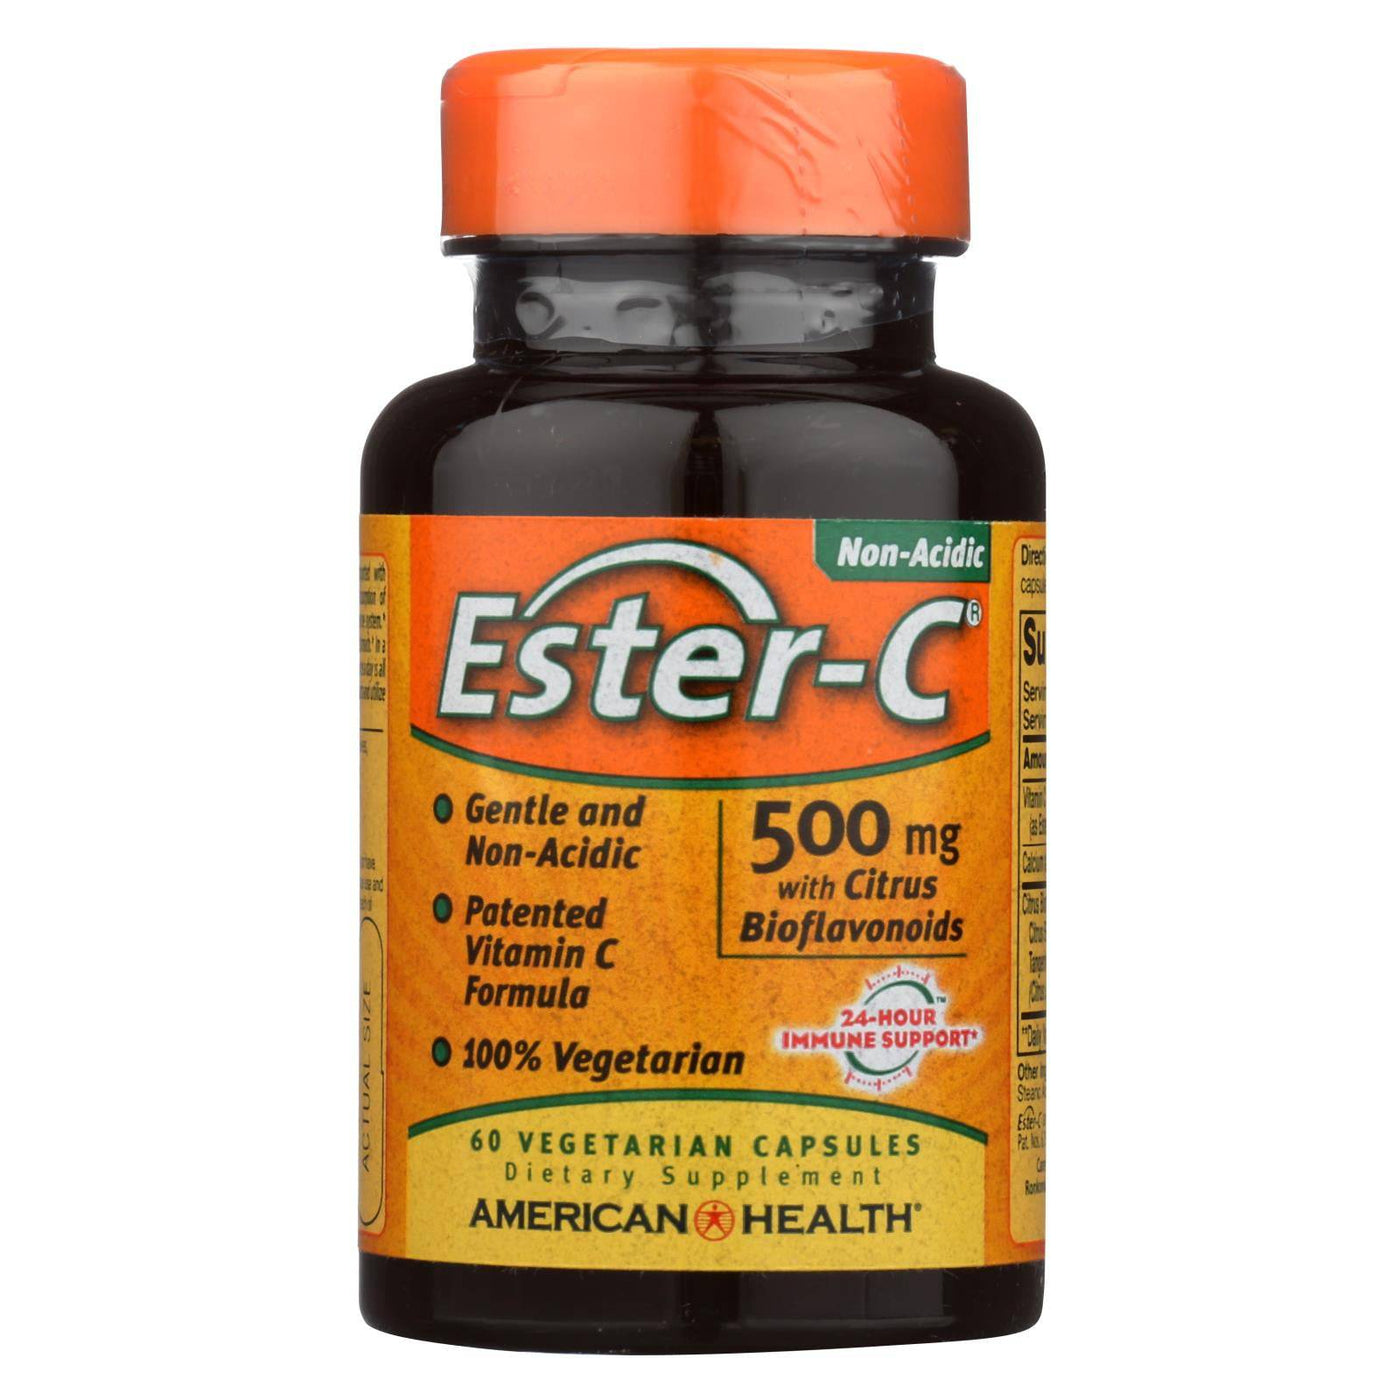 Buy American Health - Ester-c With Citrus Bioflavonoids - 500 Mg - 60 Vegetarian Capsules  at OnlyNaturals.us